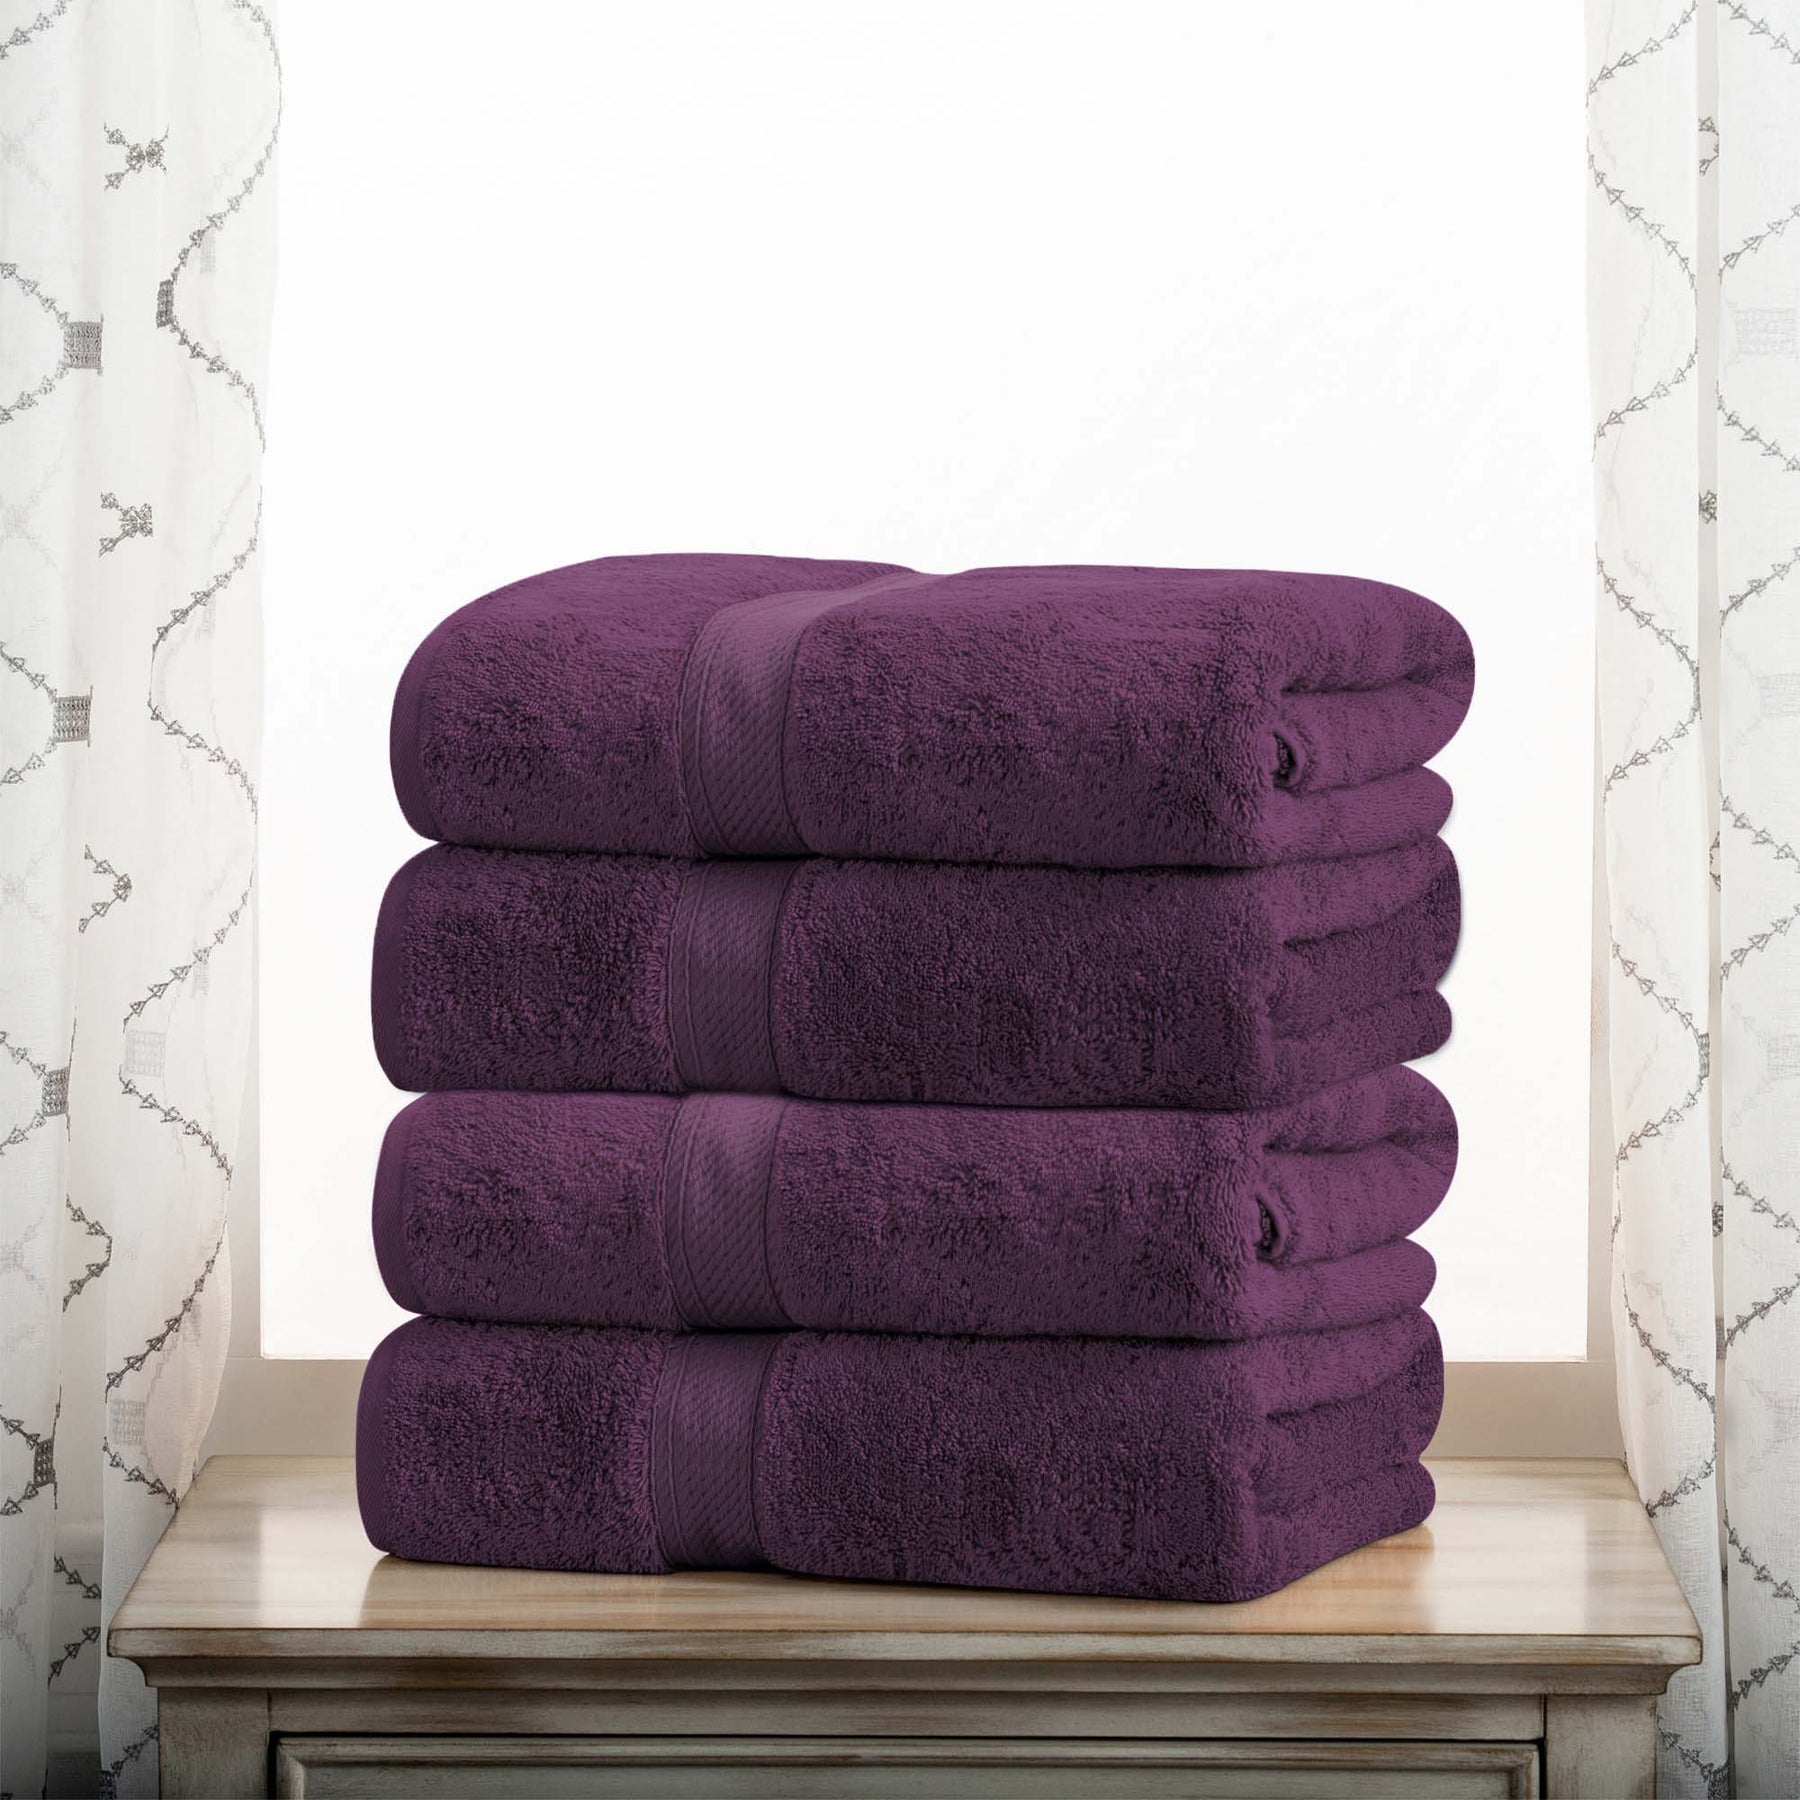 Superior Egyptian Cotton Plush Heavyweight Absorbent Luxury Soft Bath Towel  - Plum